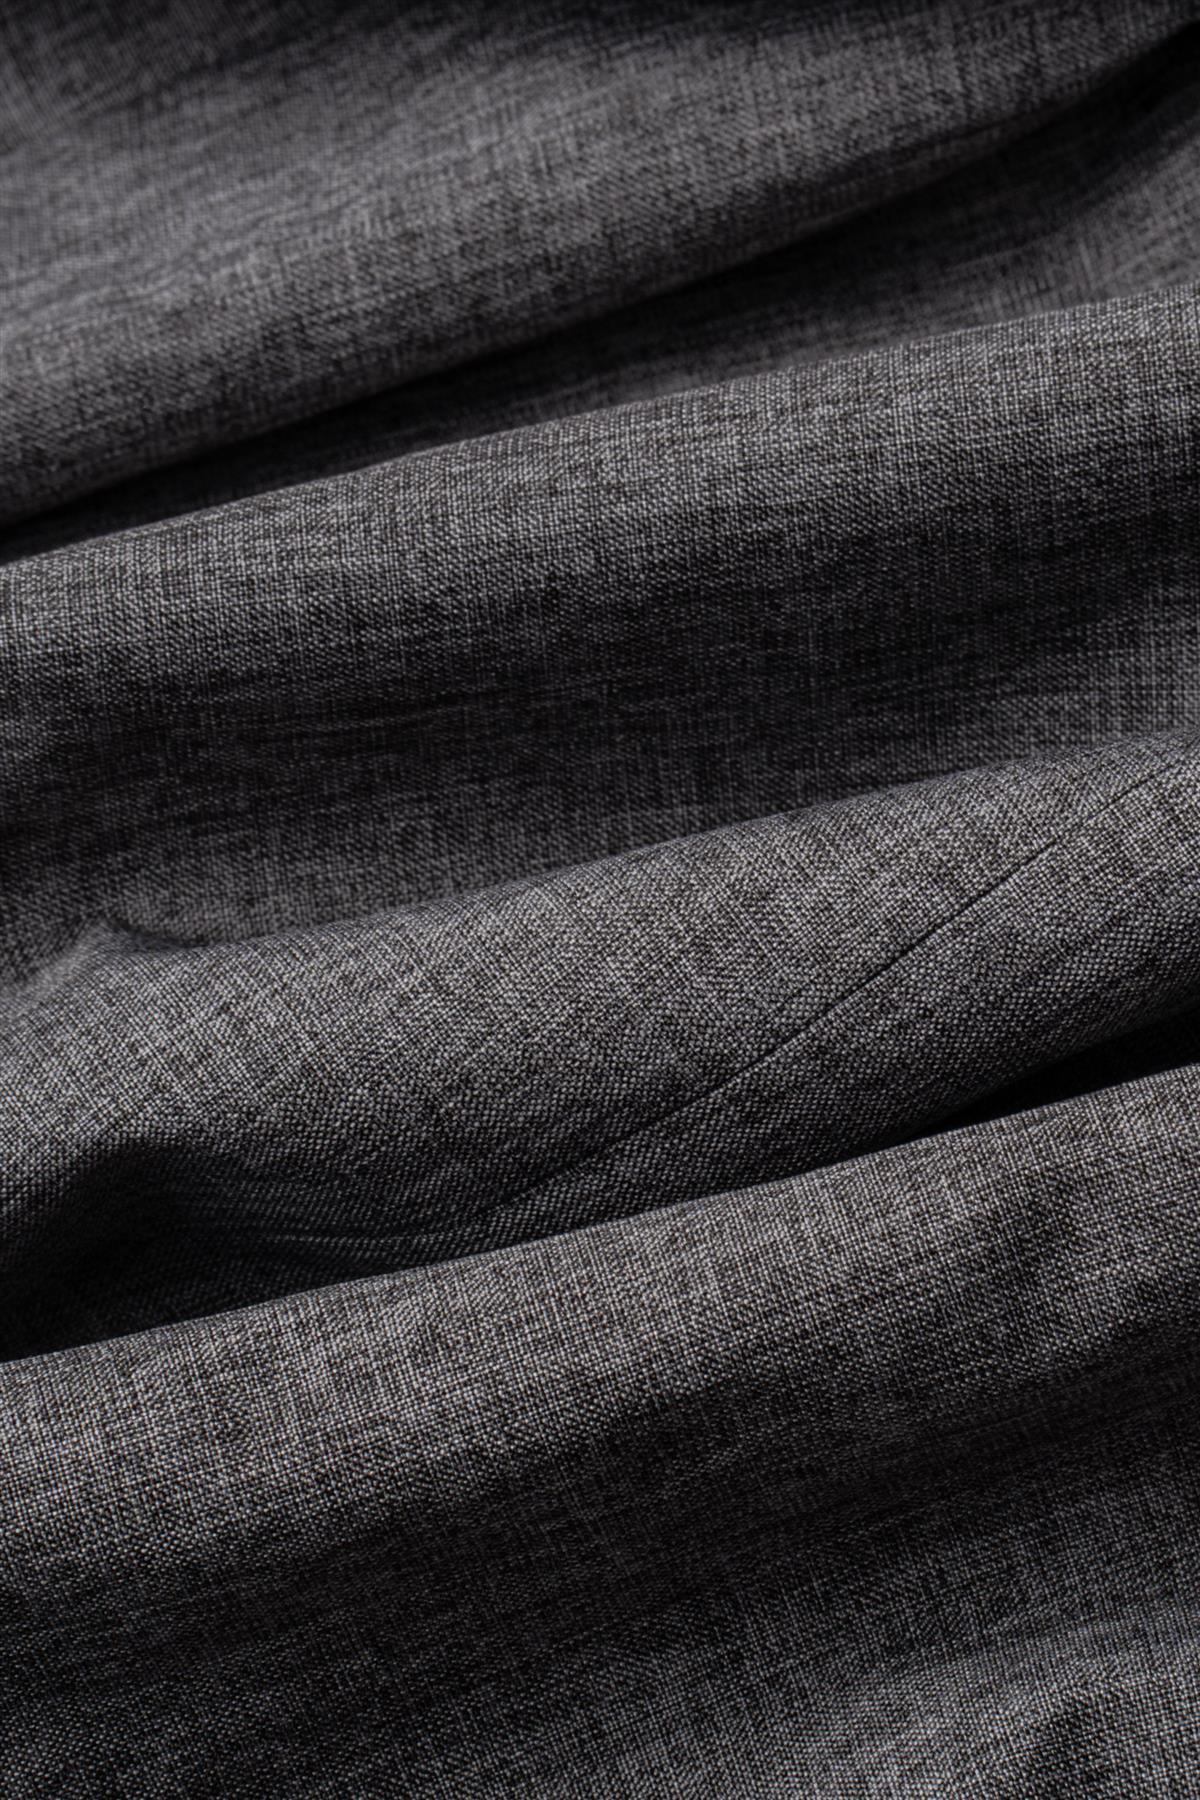 Brando mac grey long coat fabric swatch